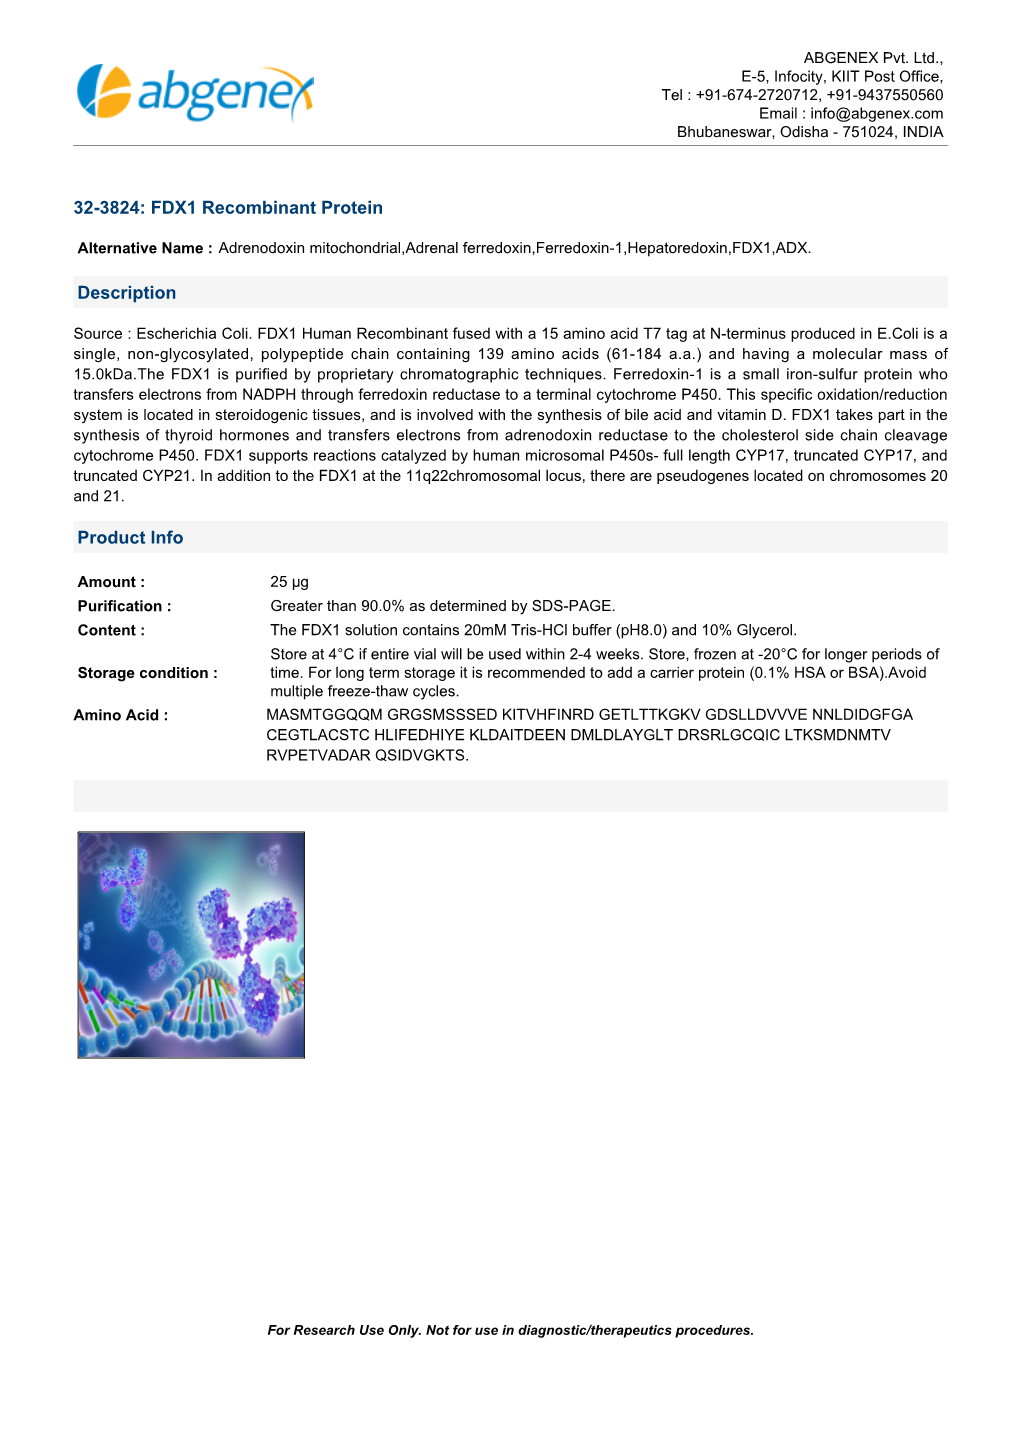 32-3824: FDX1 Recombinant Protein Description Product Info